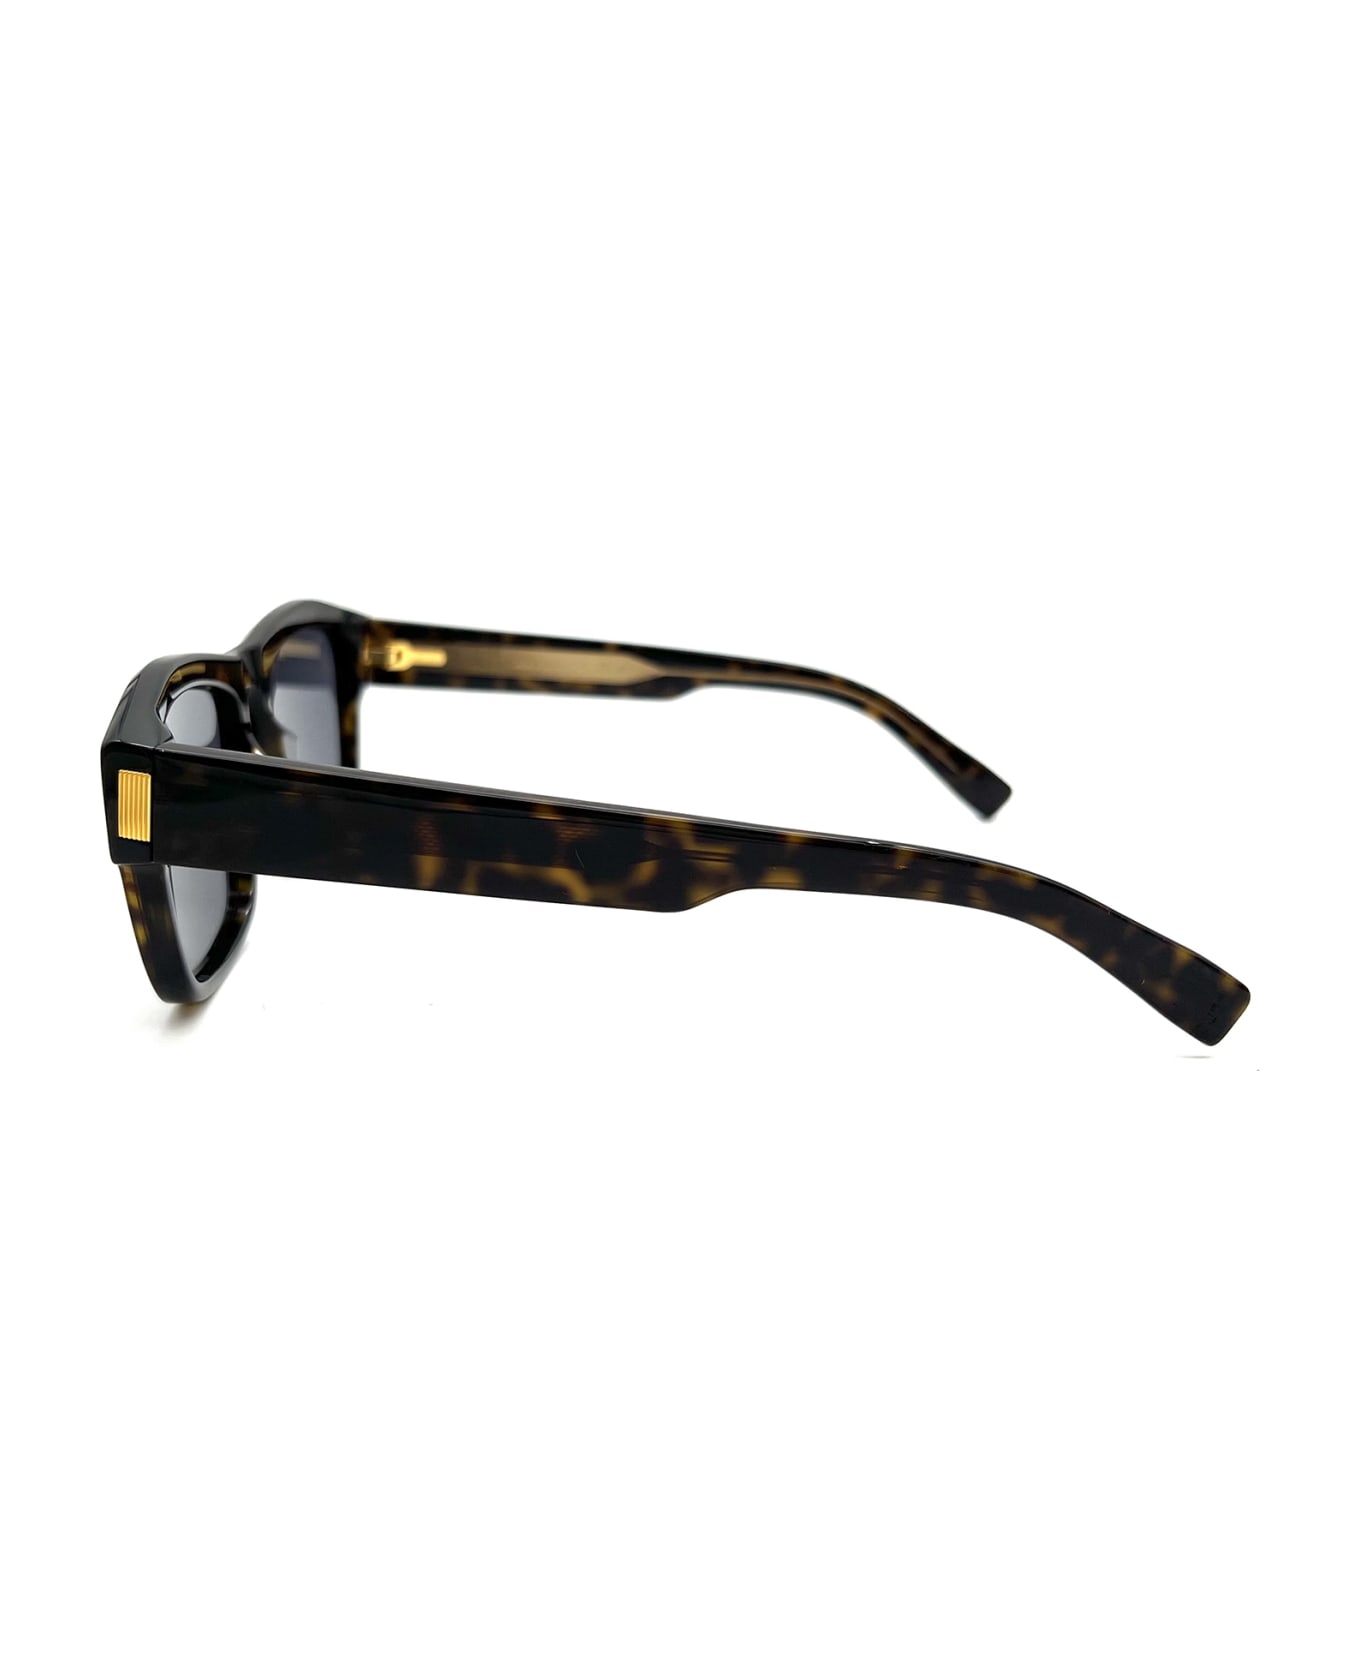 Dunhill DU0029S Sunglasses - Havana Havana Grey サングラス